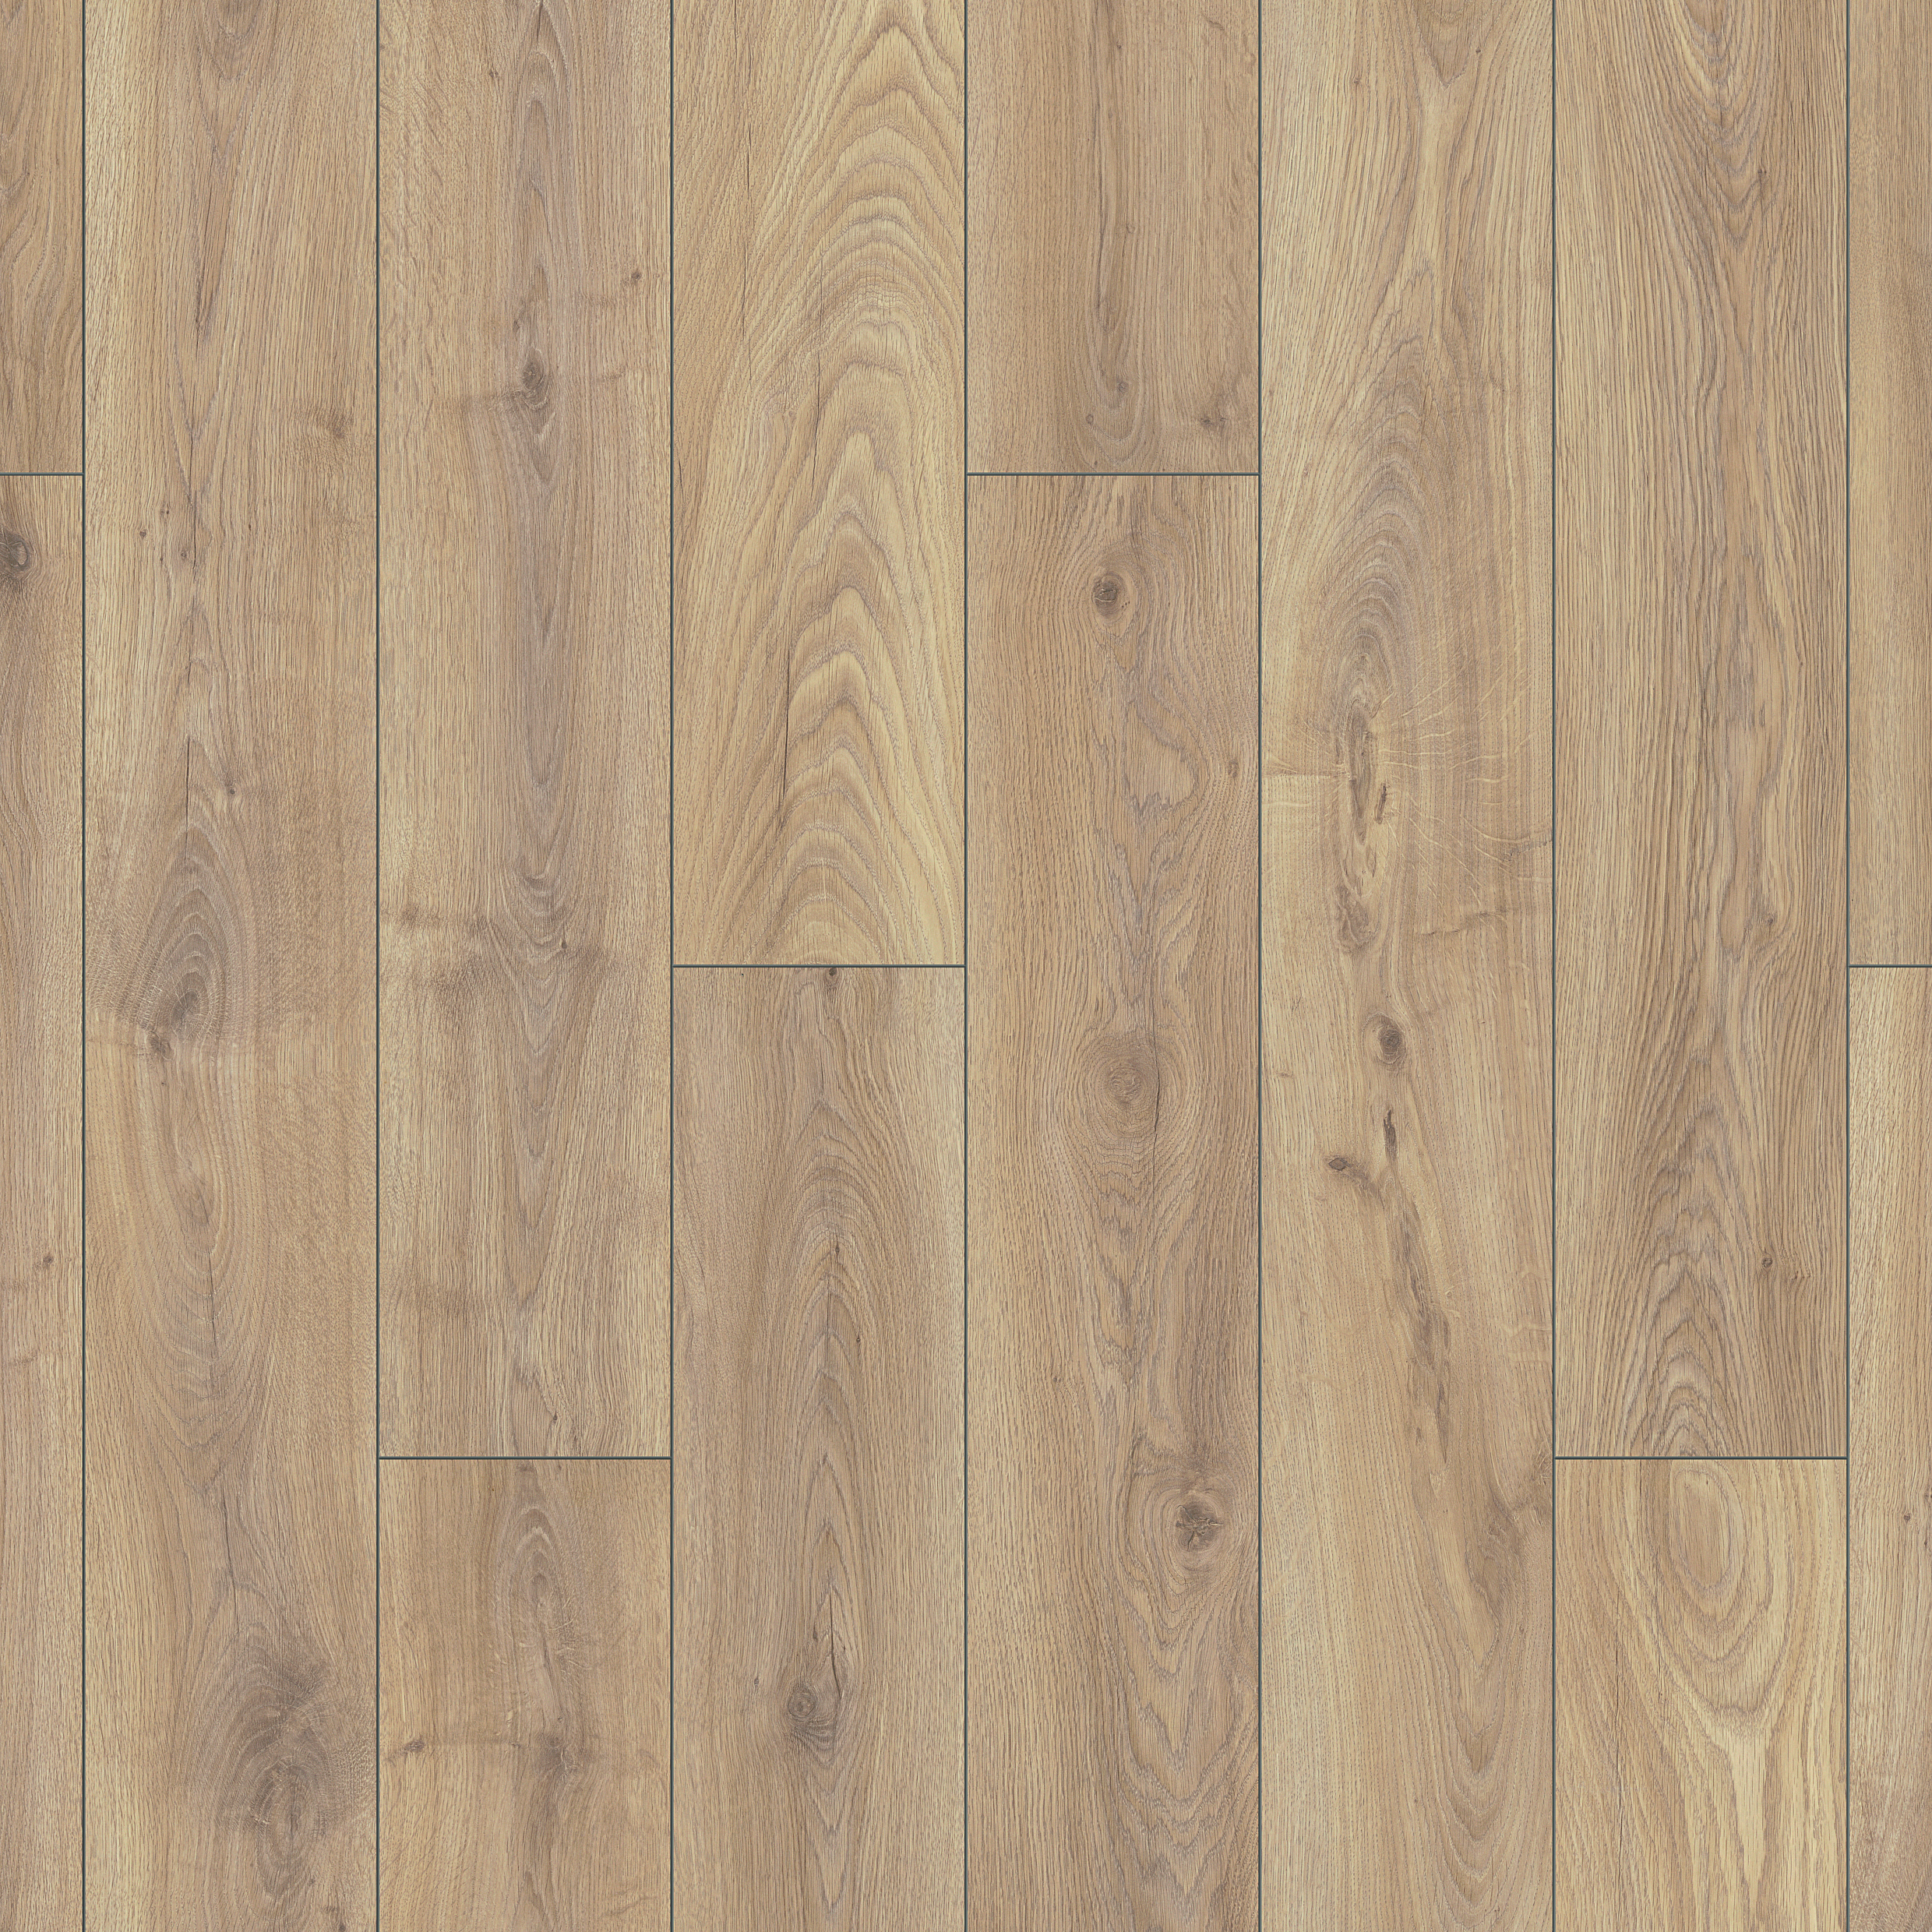 Image of Clovelly Light Oak 12mm Laminate Flooring - 1.48m2